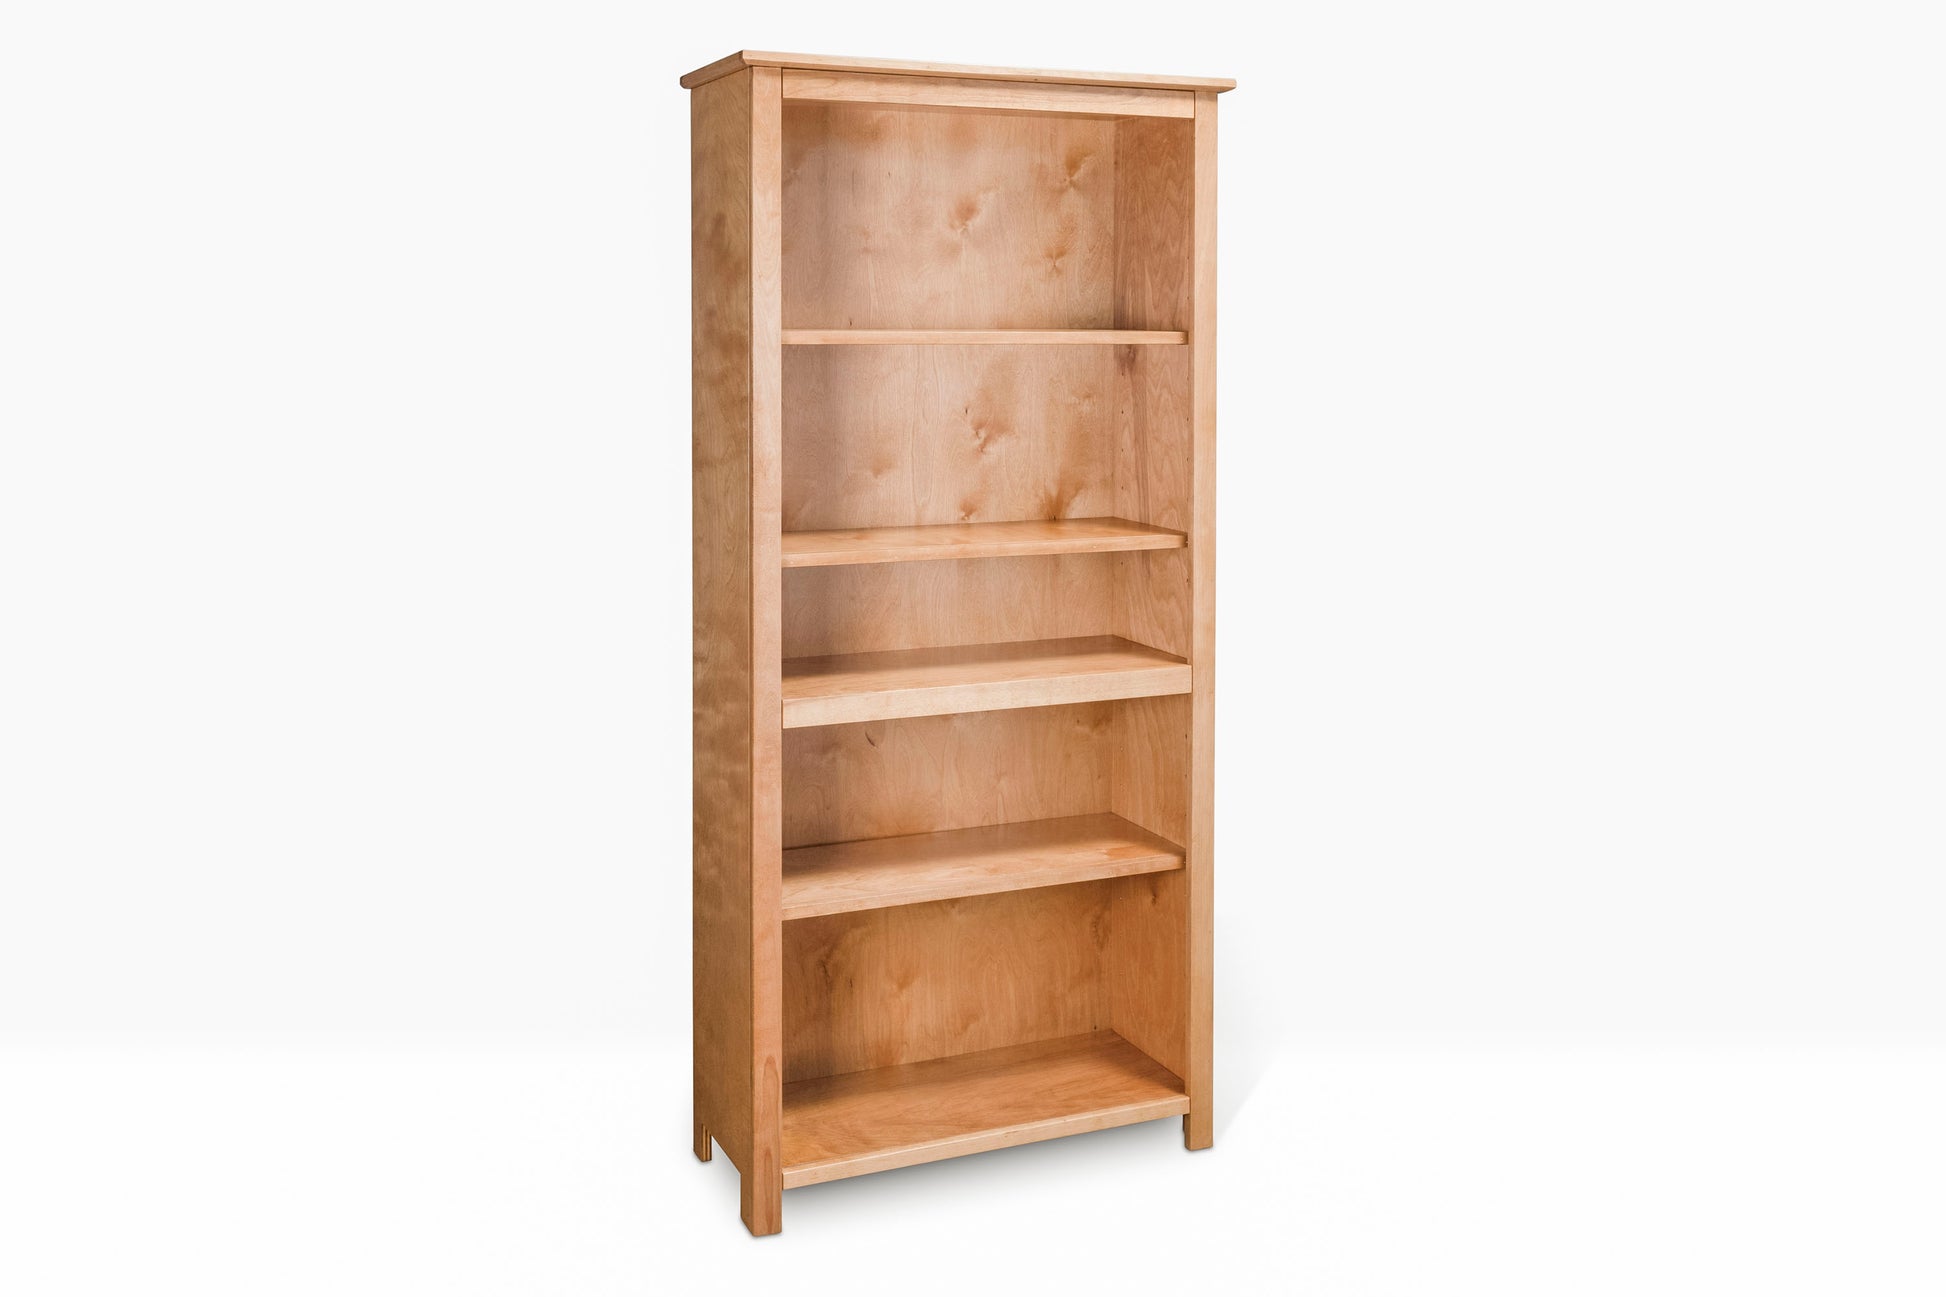 Berkshire Arlington Bookcase shown empty with adjustable shelves, Legacy Cherry finish.